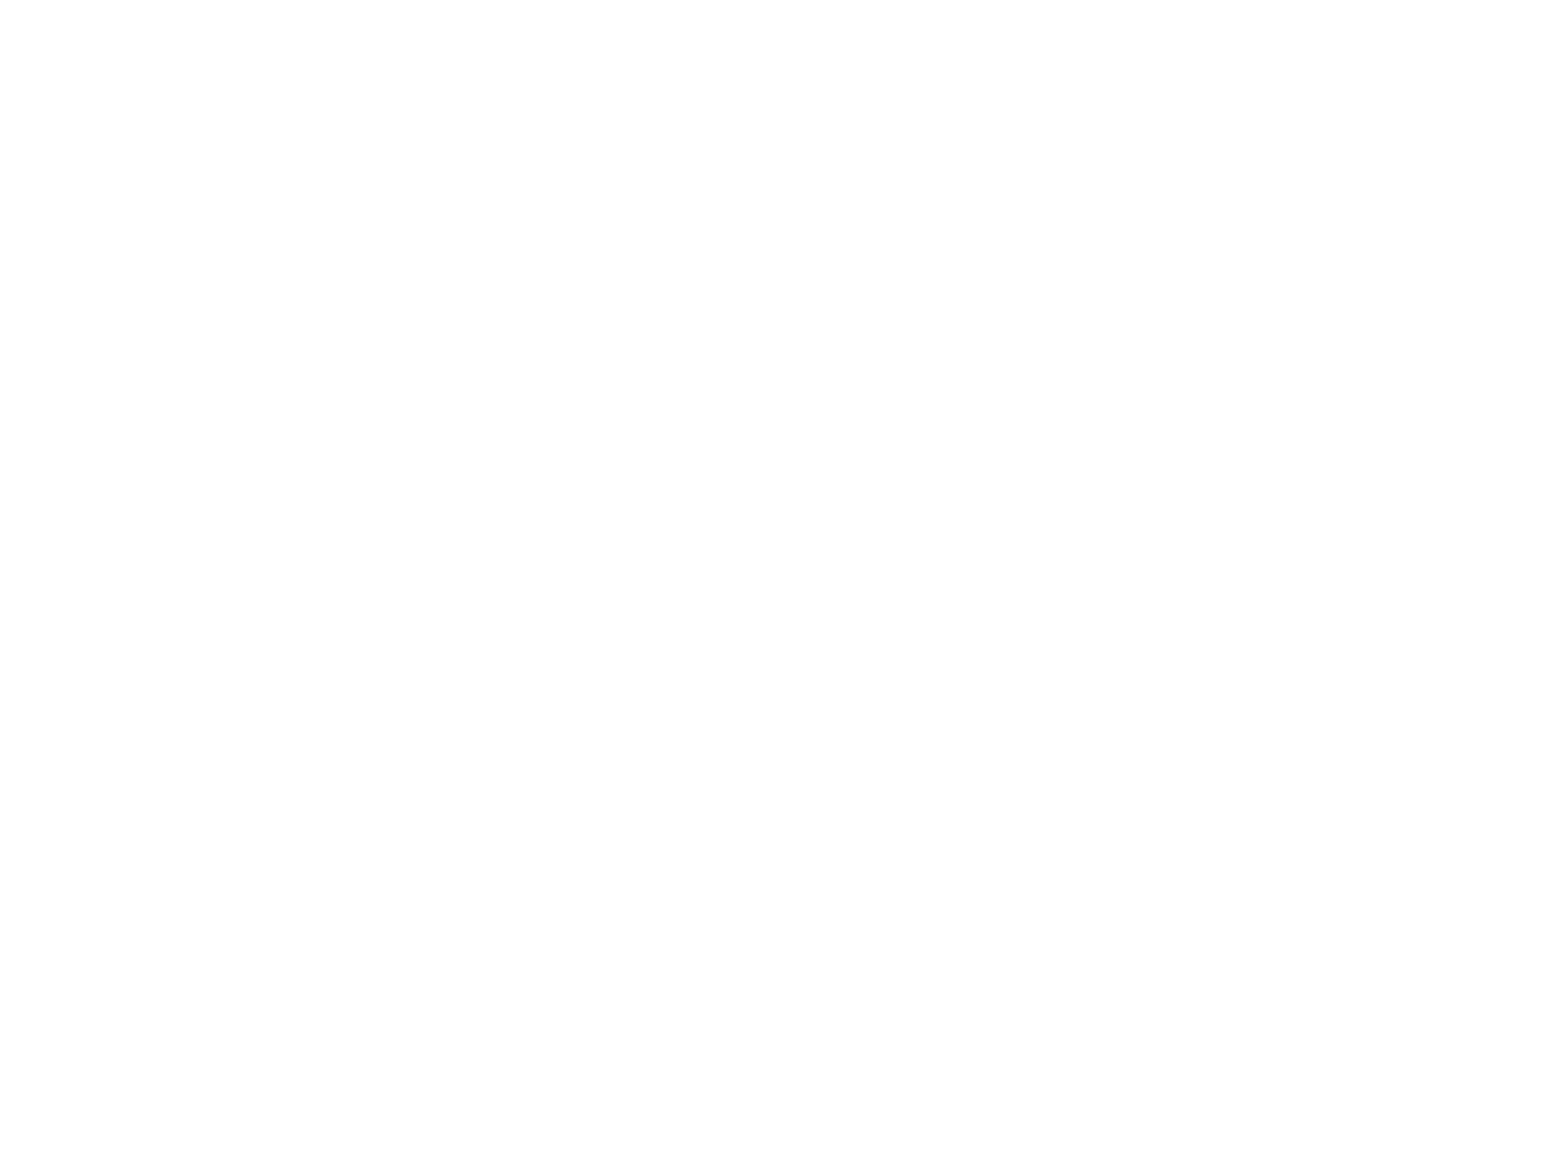 Genmab logo for dark backgrounds (transparent PNG)